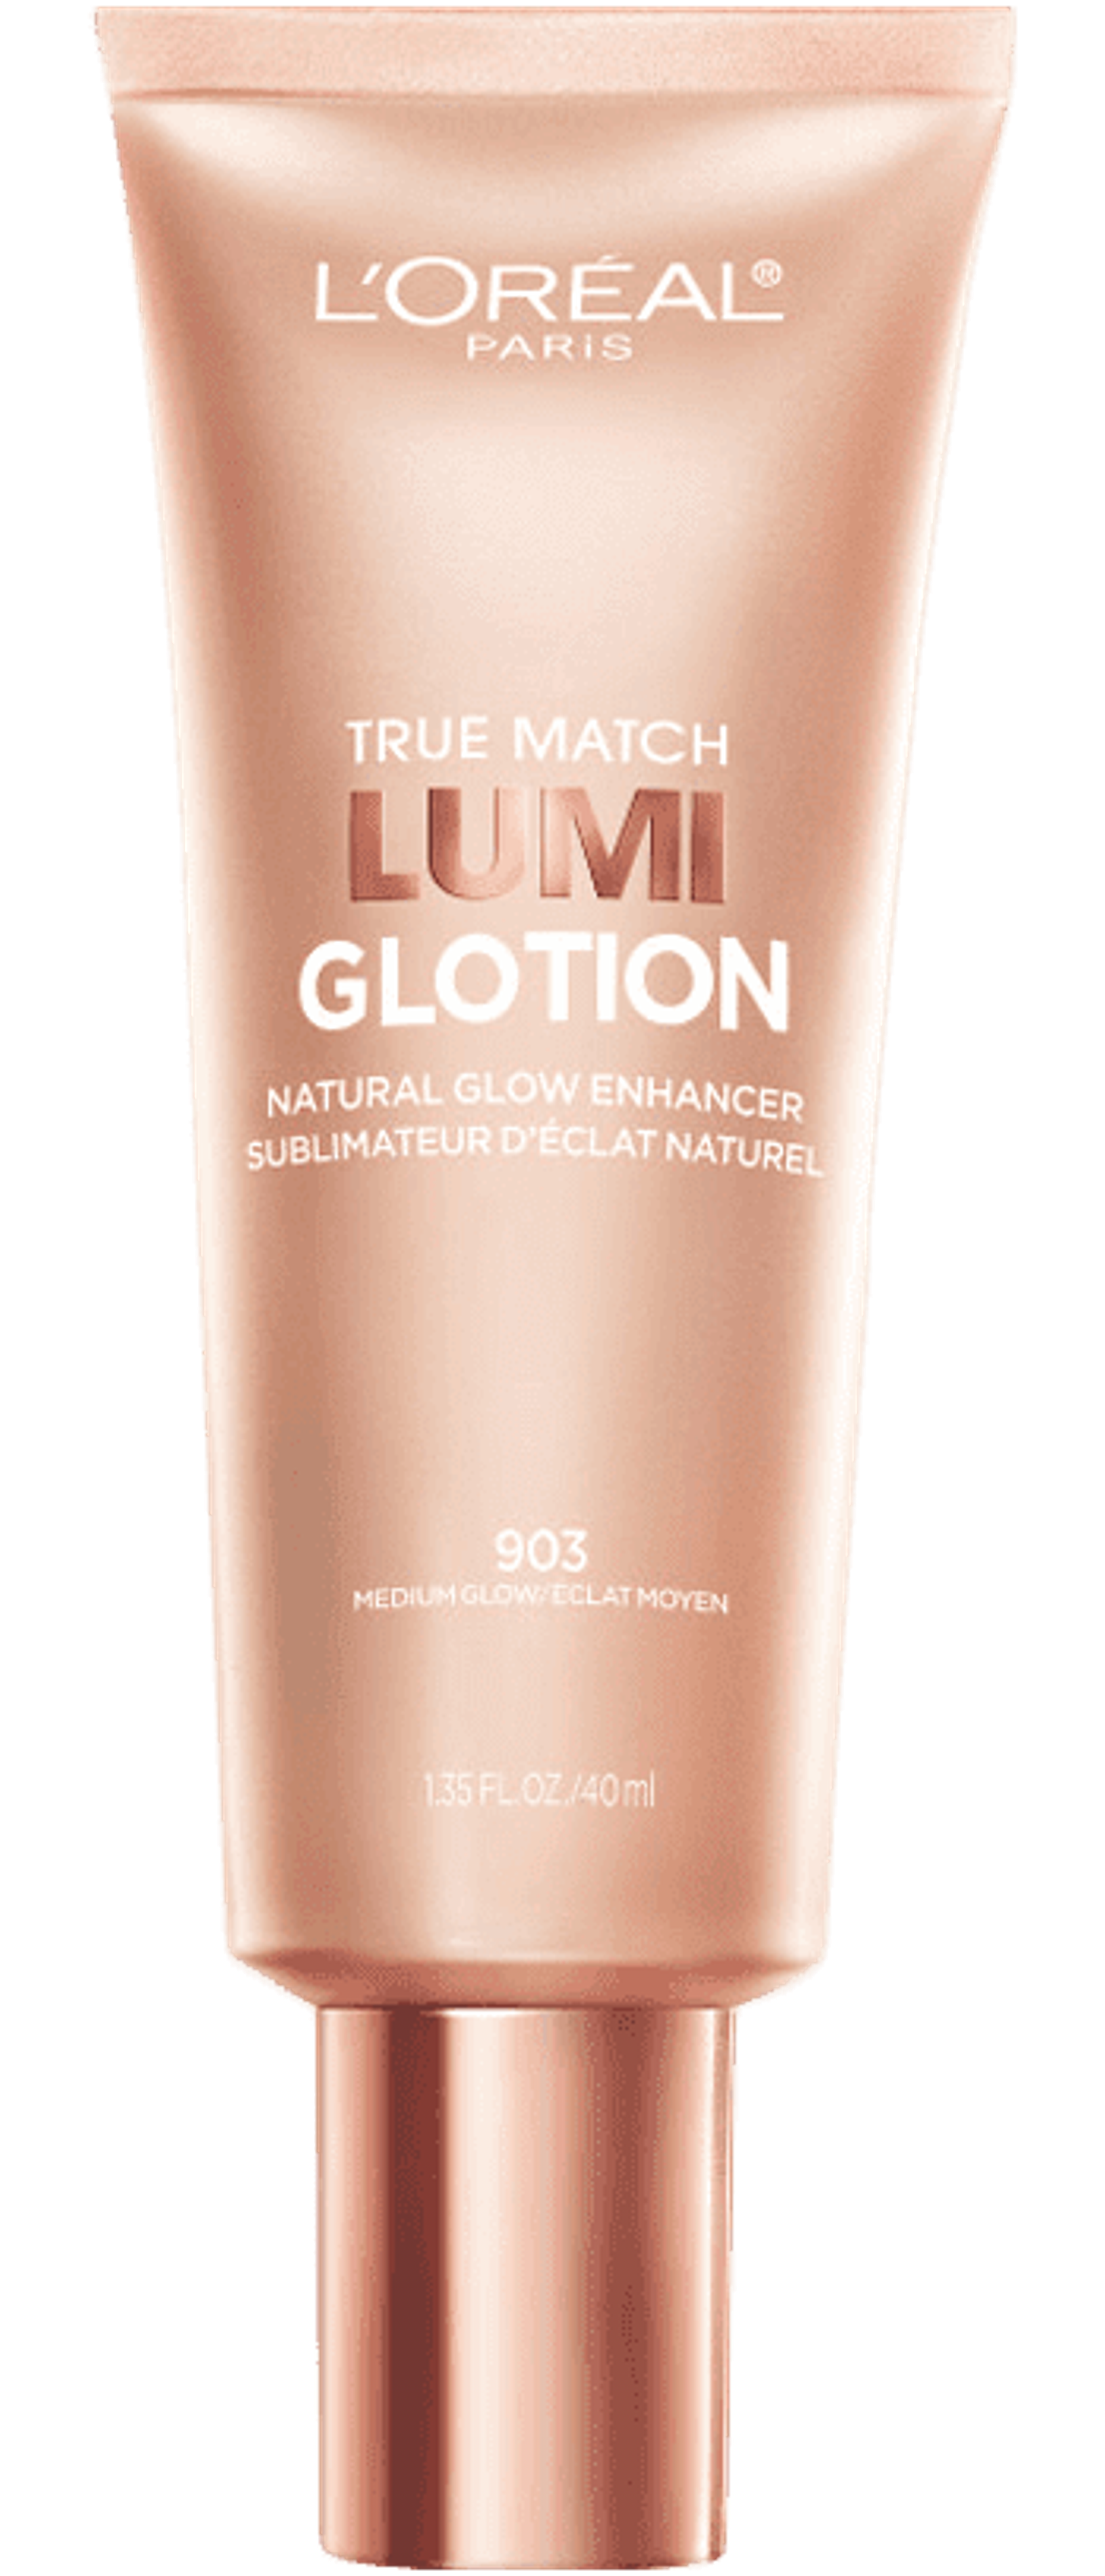 True Match Lumi Glotion & Makeup Highlighter - L'Oréal Paris